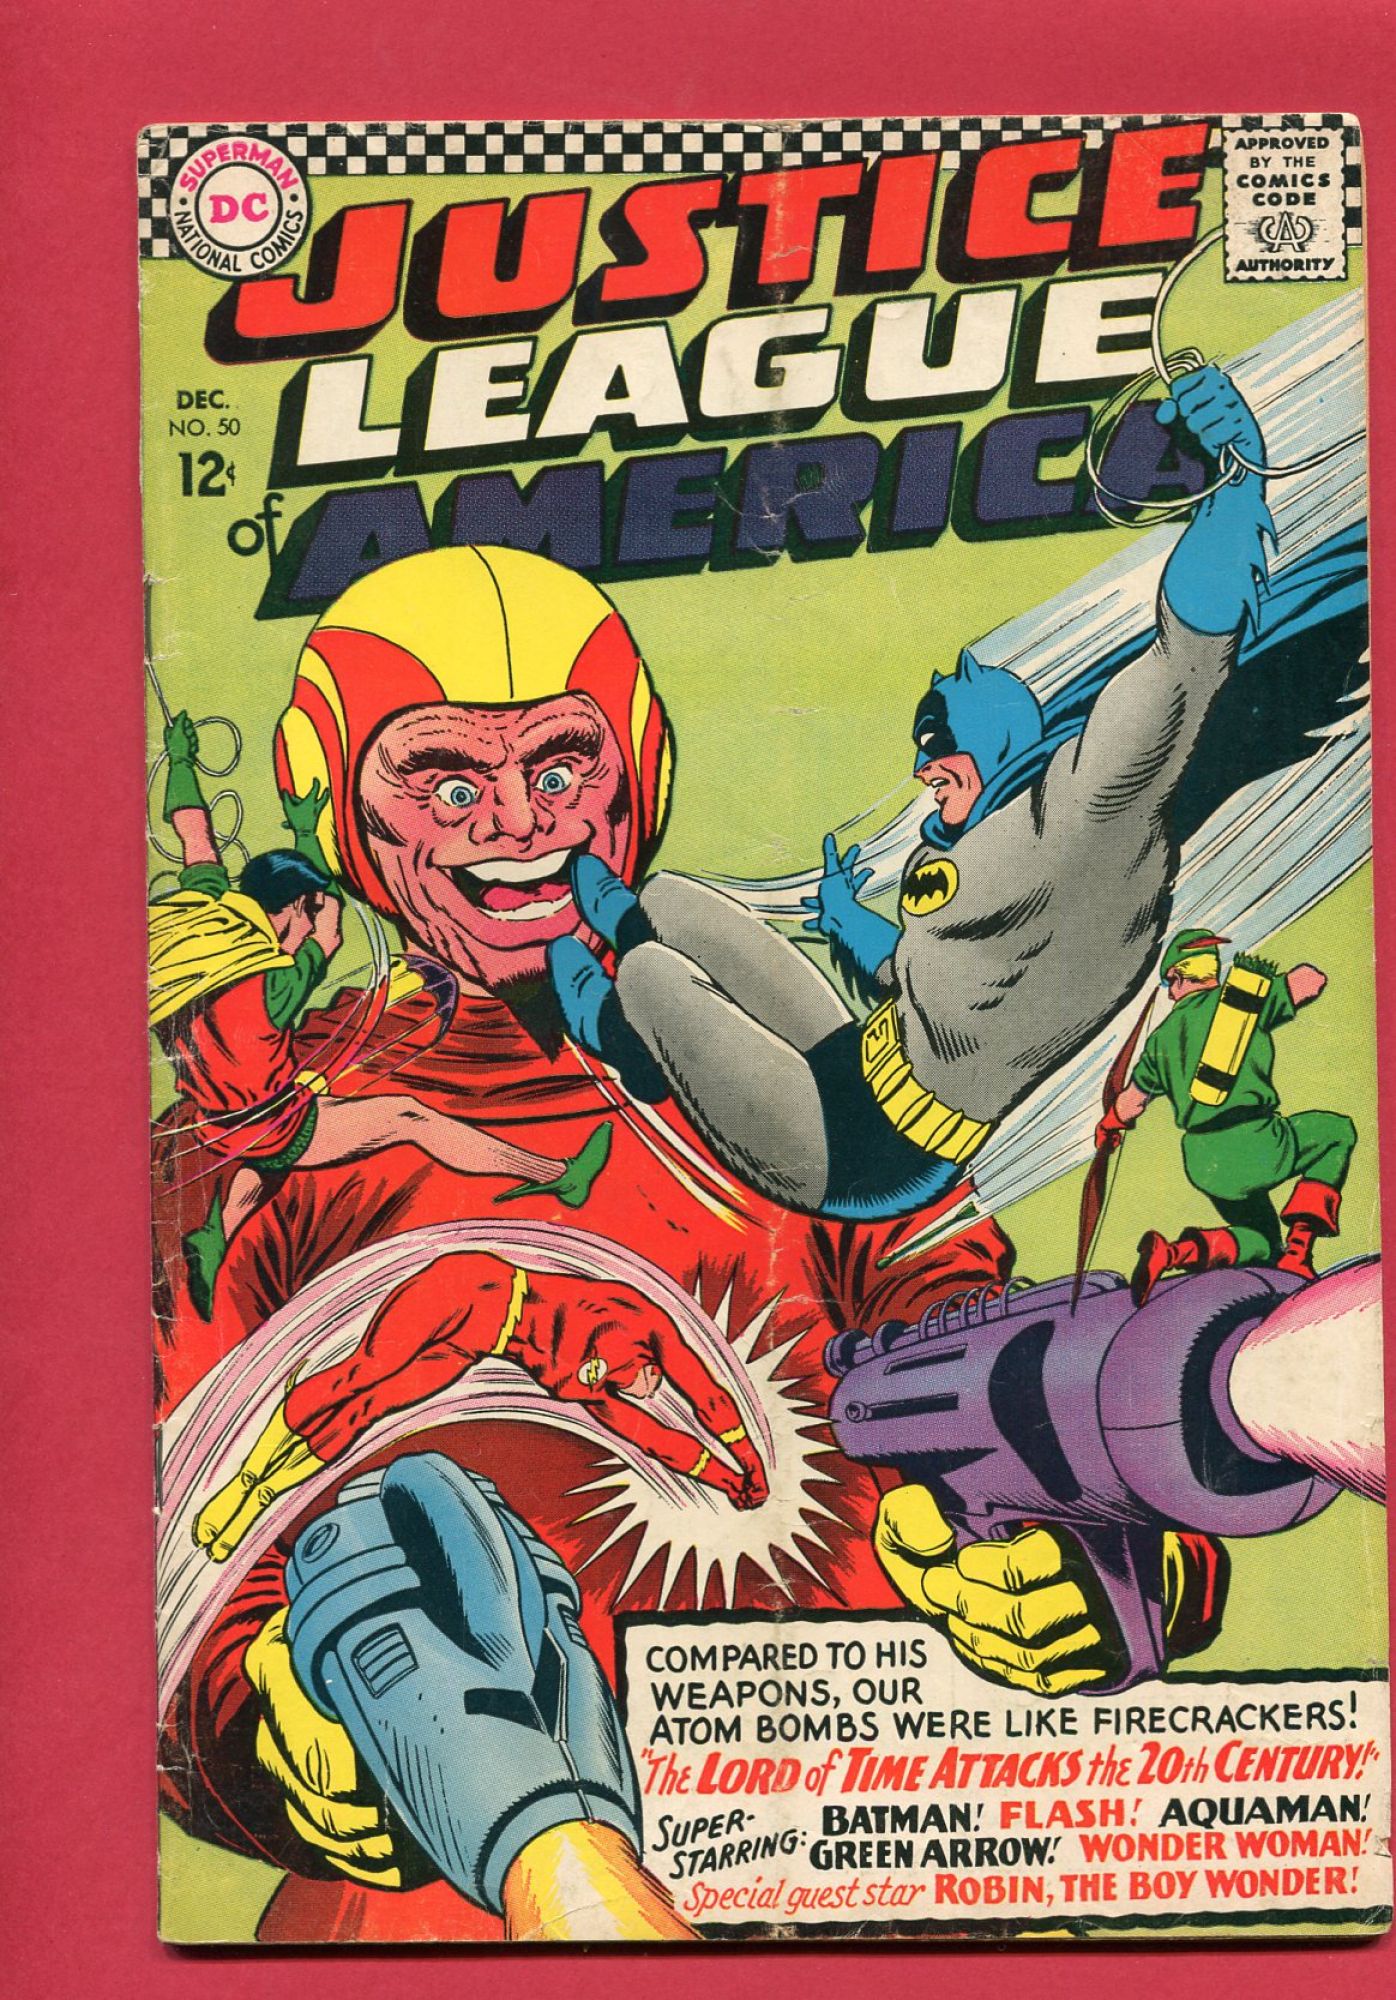 Justice League of America #50, Dec 1966, 3.0 GD/VG